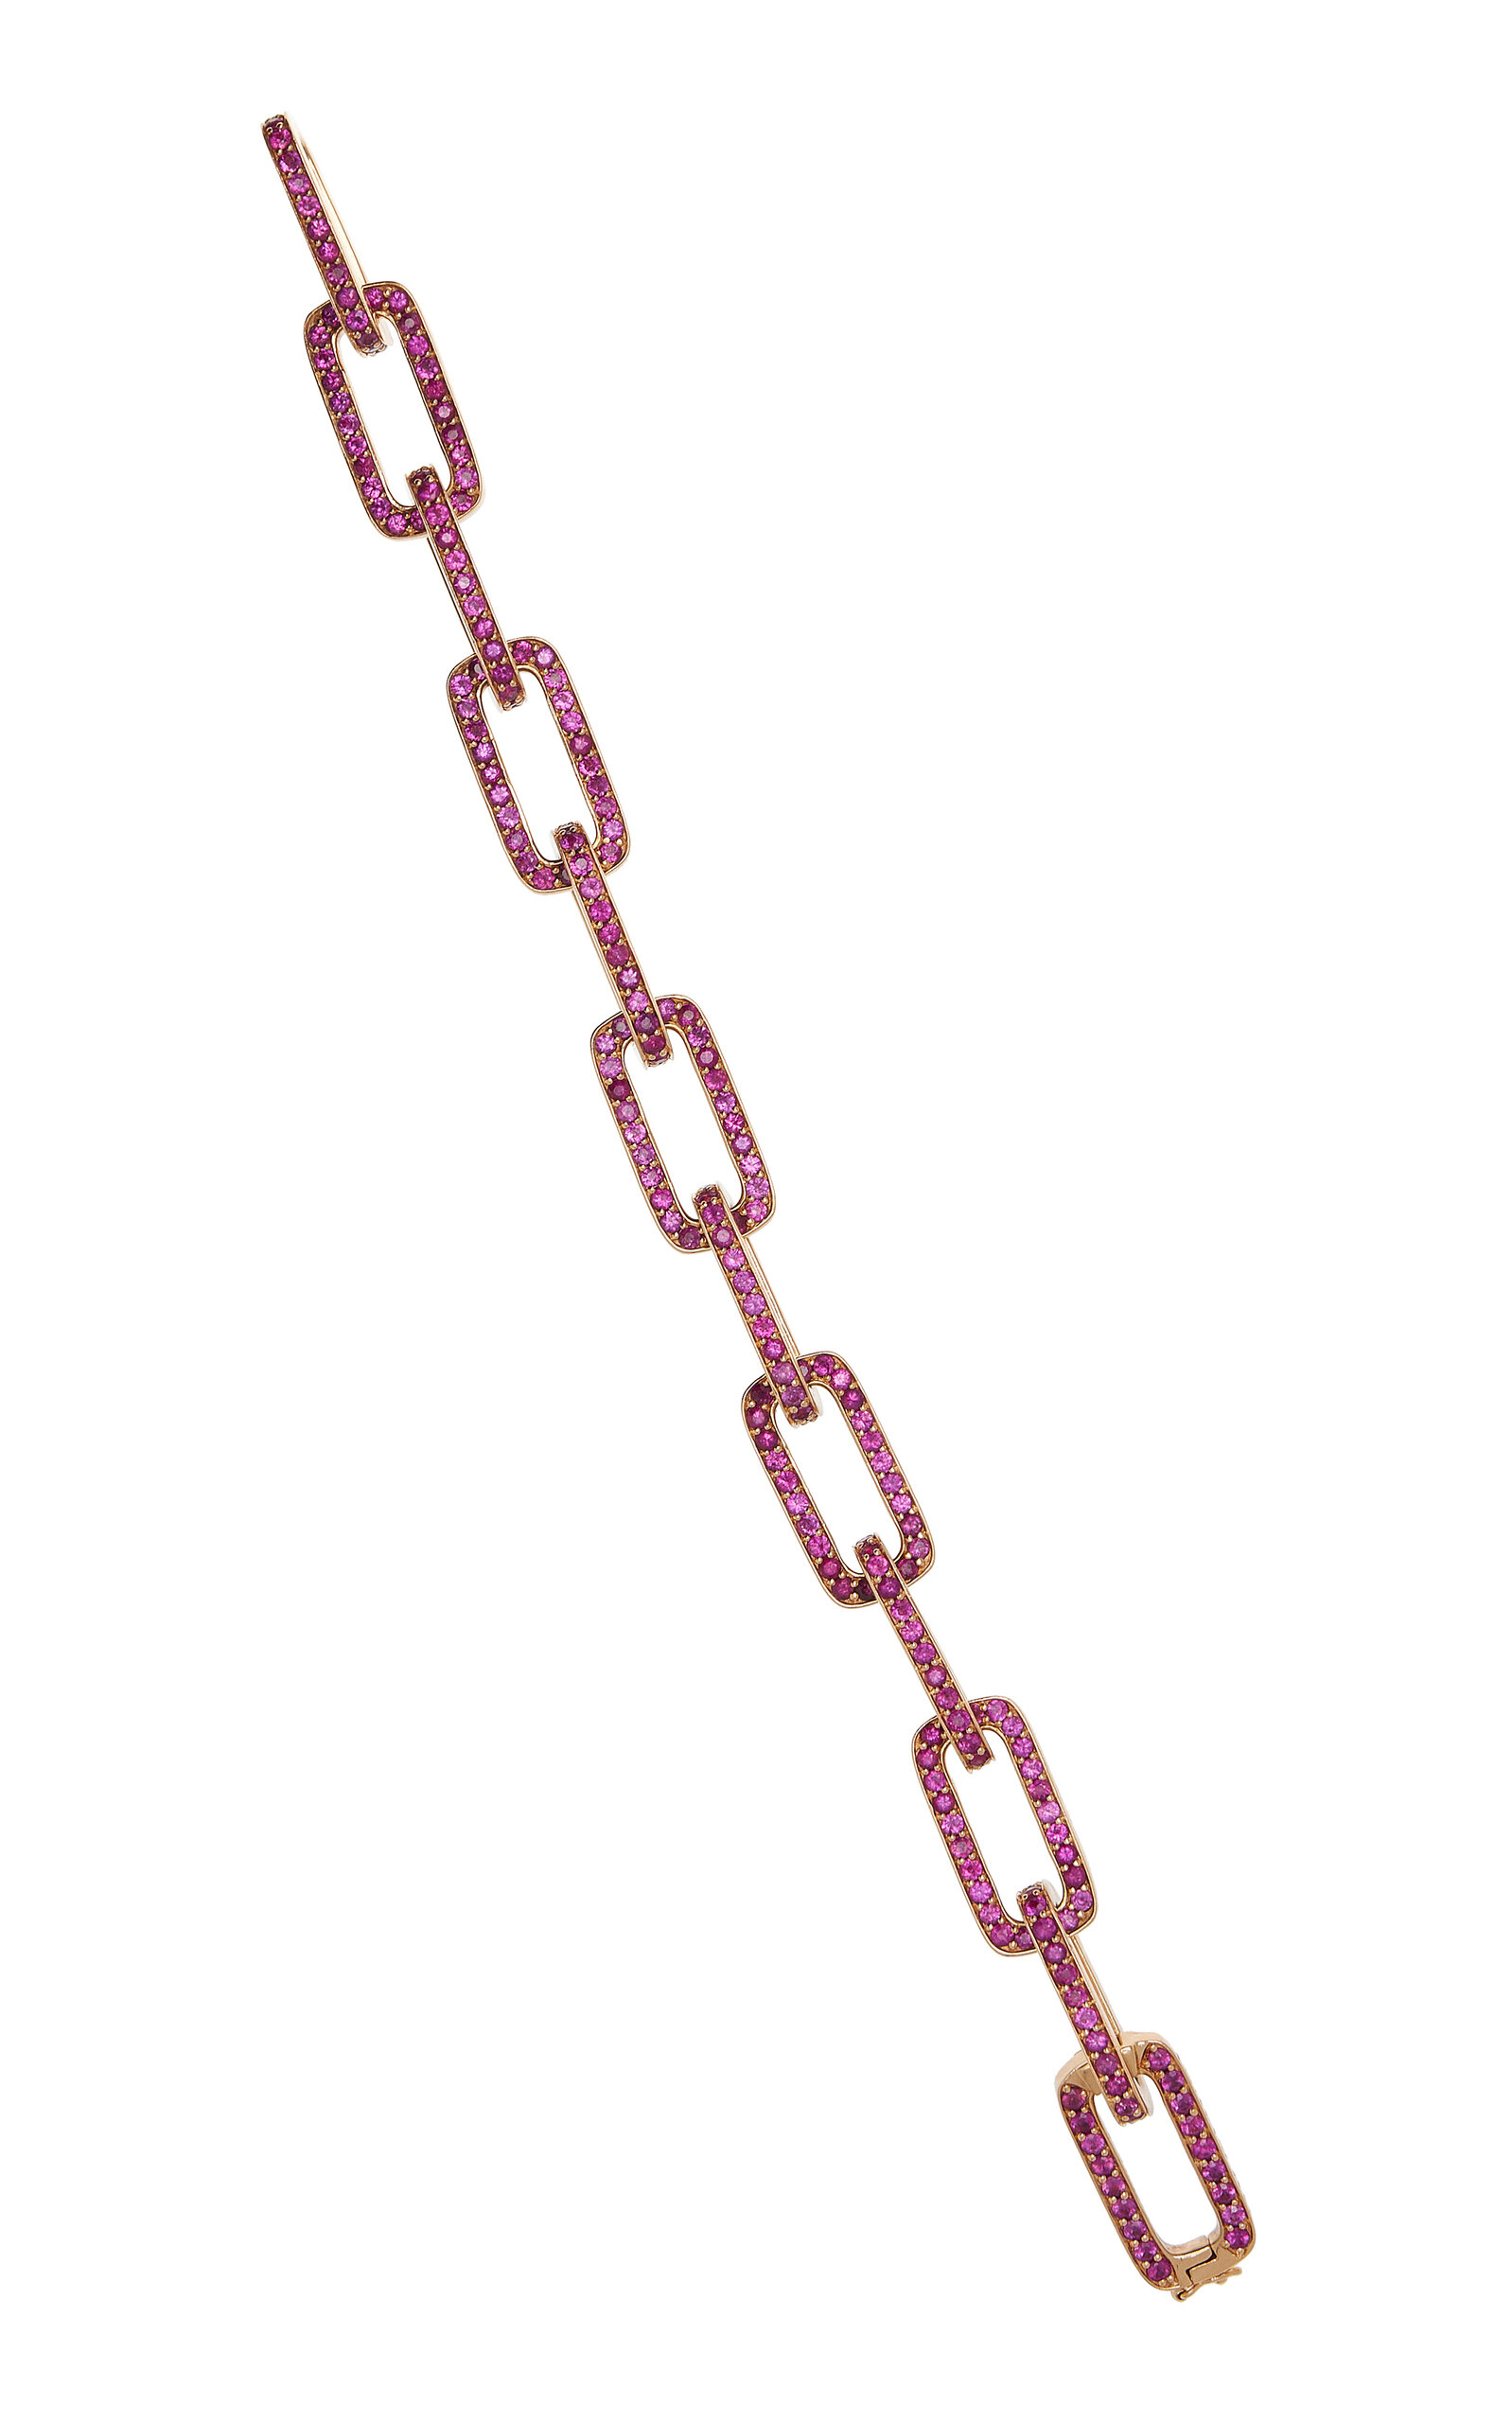 Piranesi Women's 18K Gold Mosaique Link Bracelet in Deep Pink Sapphire